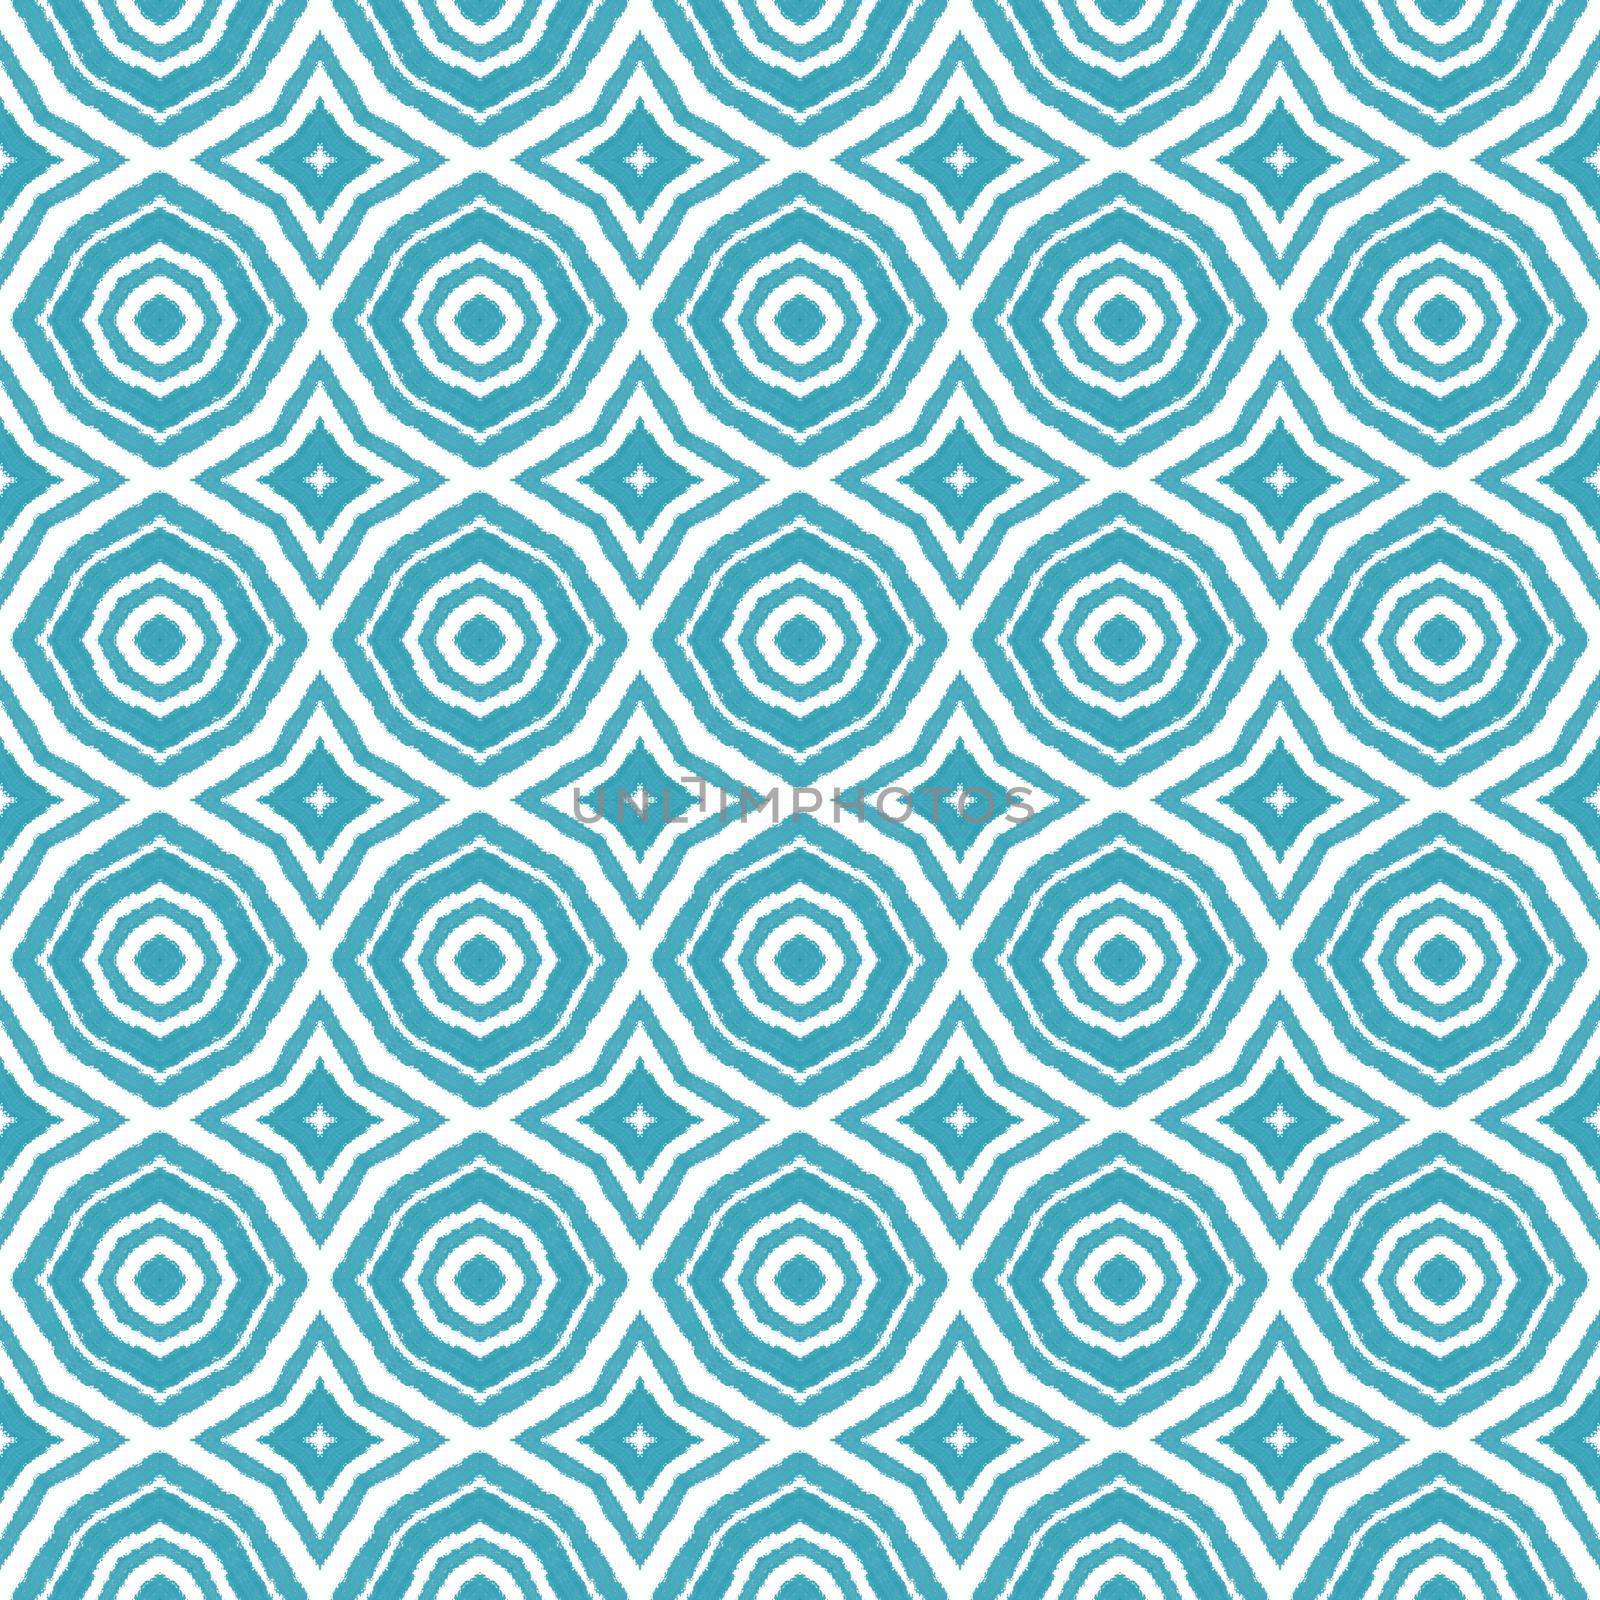 Exotic seamless pattern. Turquoise symmetrical kaleidoscope background. Summer swimwear exotic seamless design. Textile ready pleasing print, swimwear fabric, wallpaper, wrapping.